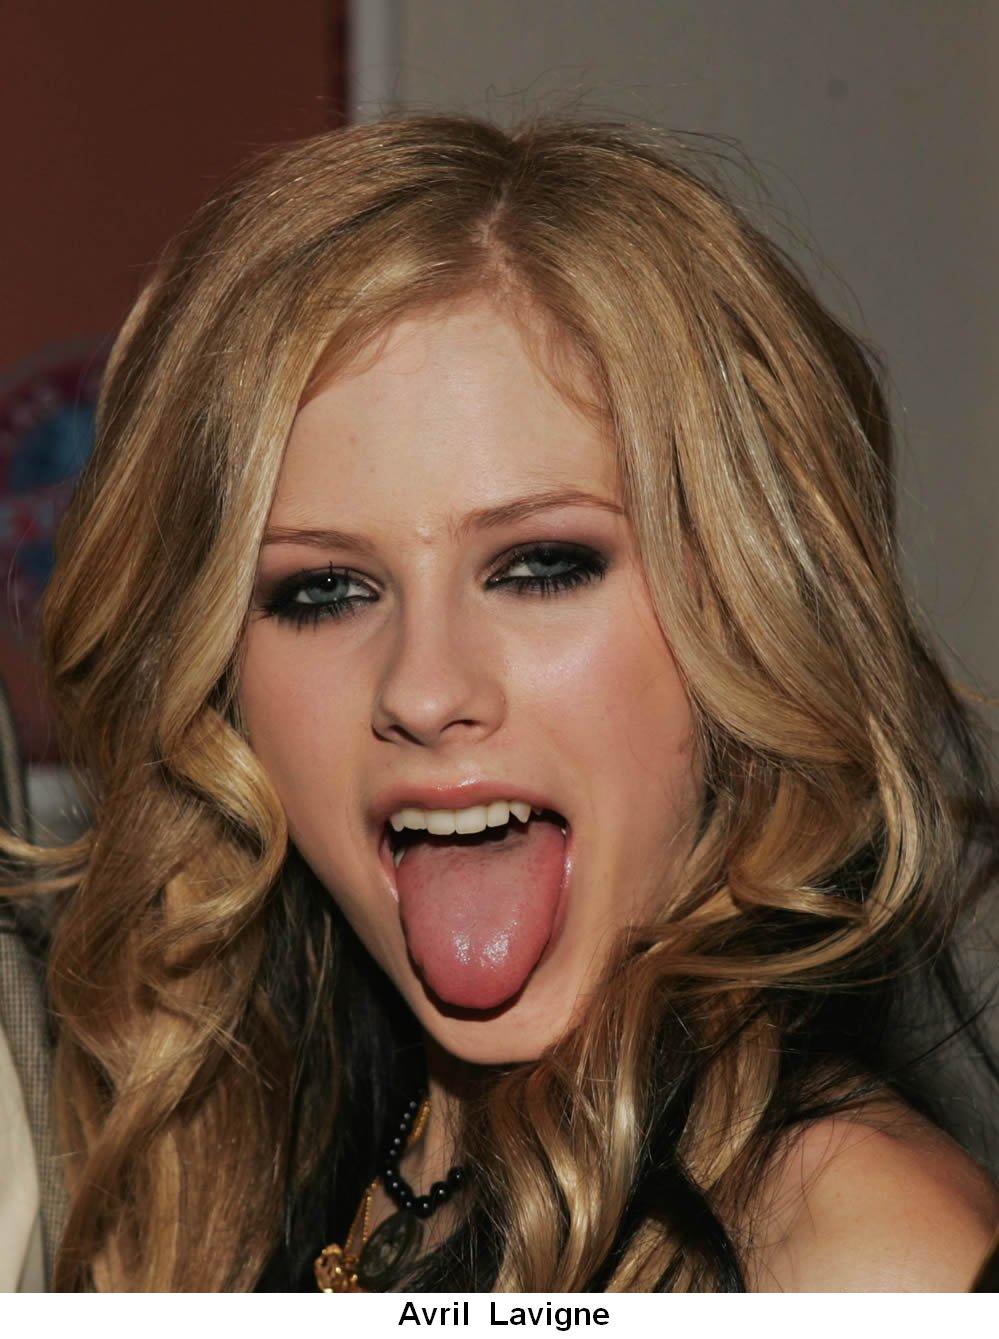 Avril Lavigne photo #472139 Celebs-Place.com.